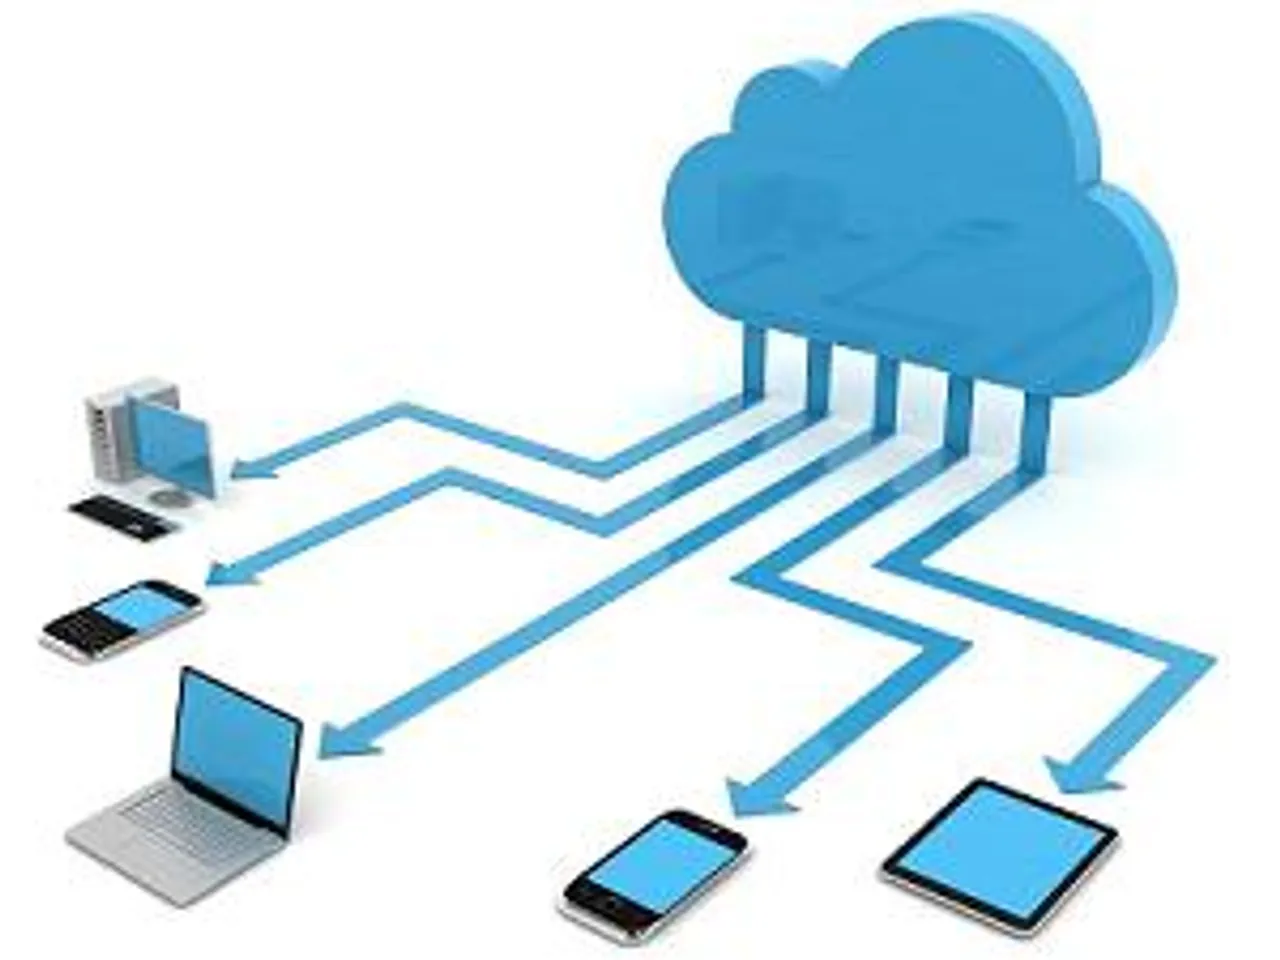 Tata Communications IZO Private Cloud rises over cloud adoption barriers